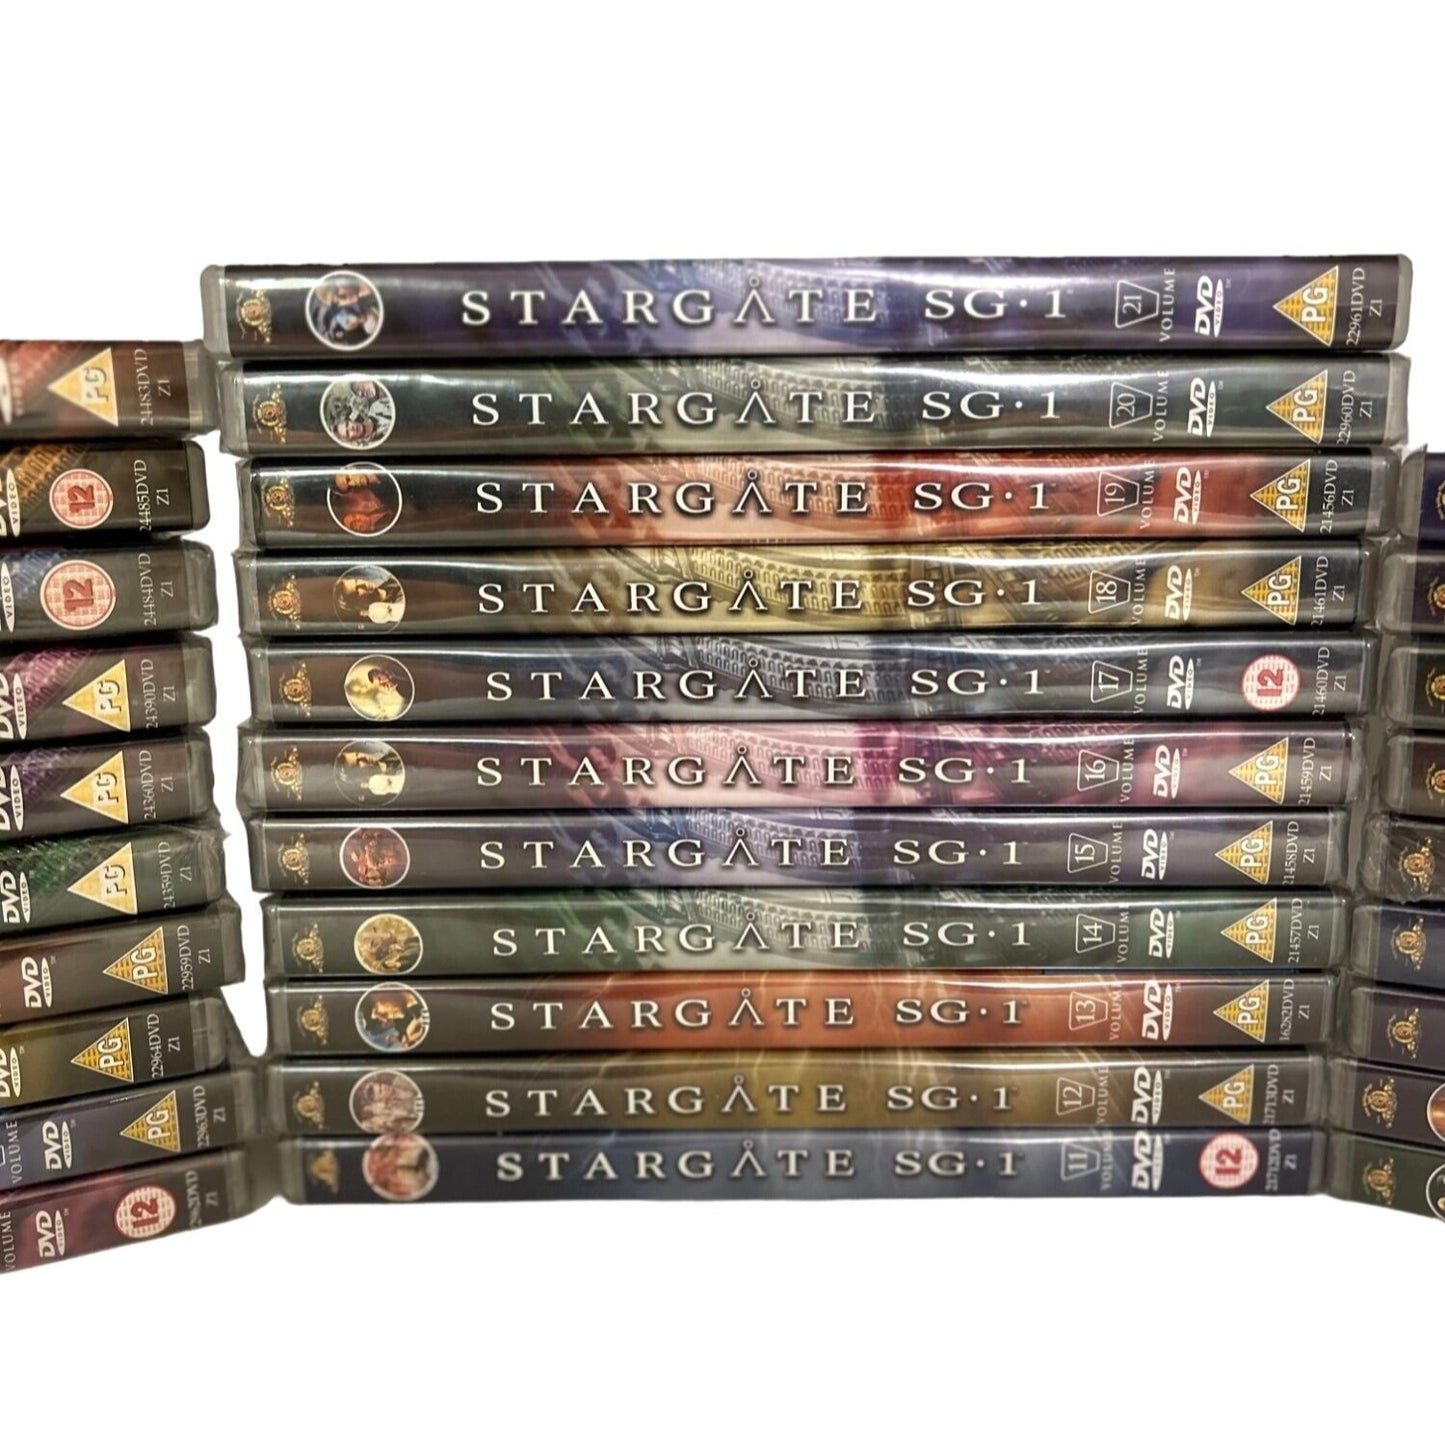 Stargate SG-1 REGION 2/PAL non-USA Format DVD near complete set Volume 2-31